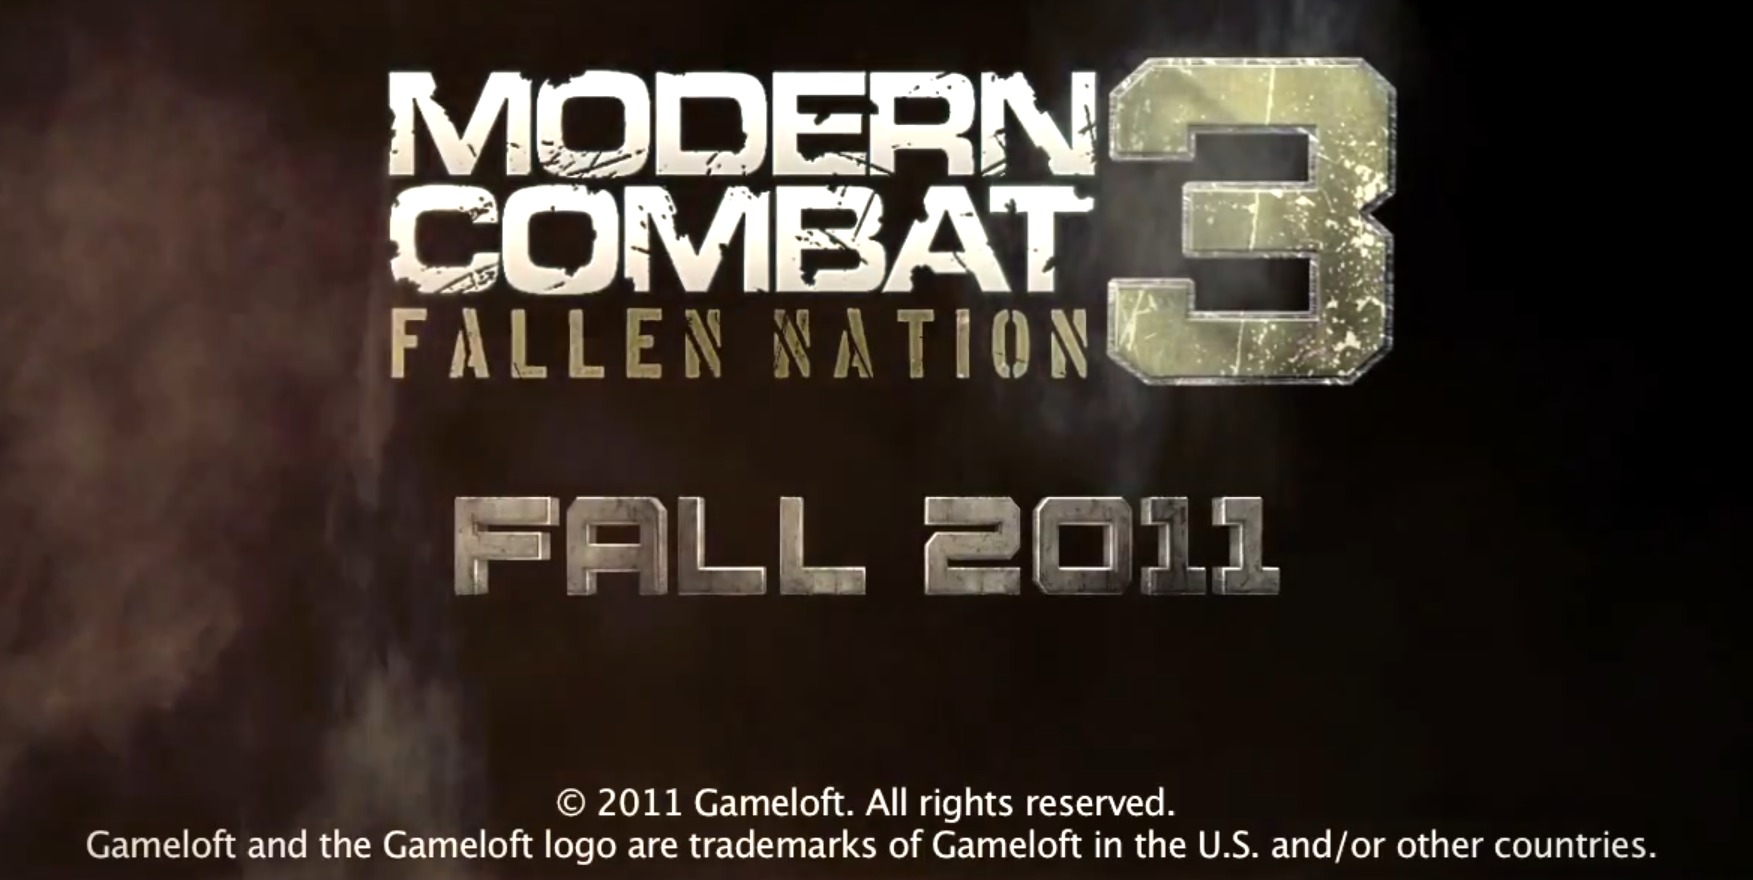 Modern Combat 3. Modern Combat 3 logo. Злодеи Модерн комбат 3 ФАЛЛЕН натион. Gameloft logo. Combat 3 fallen nation